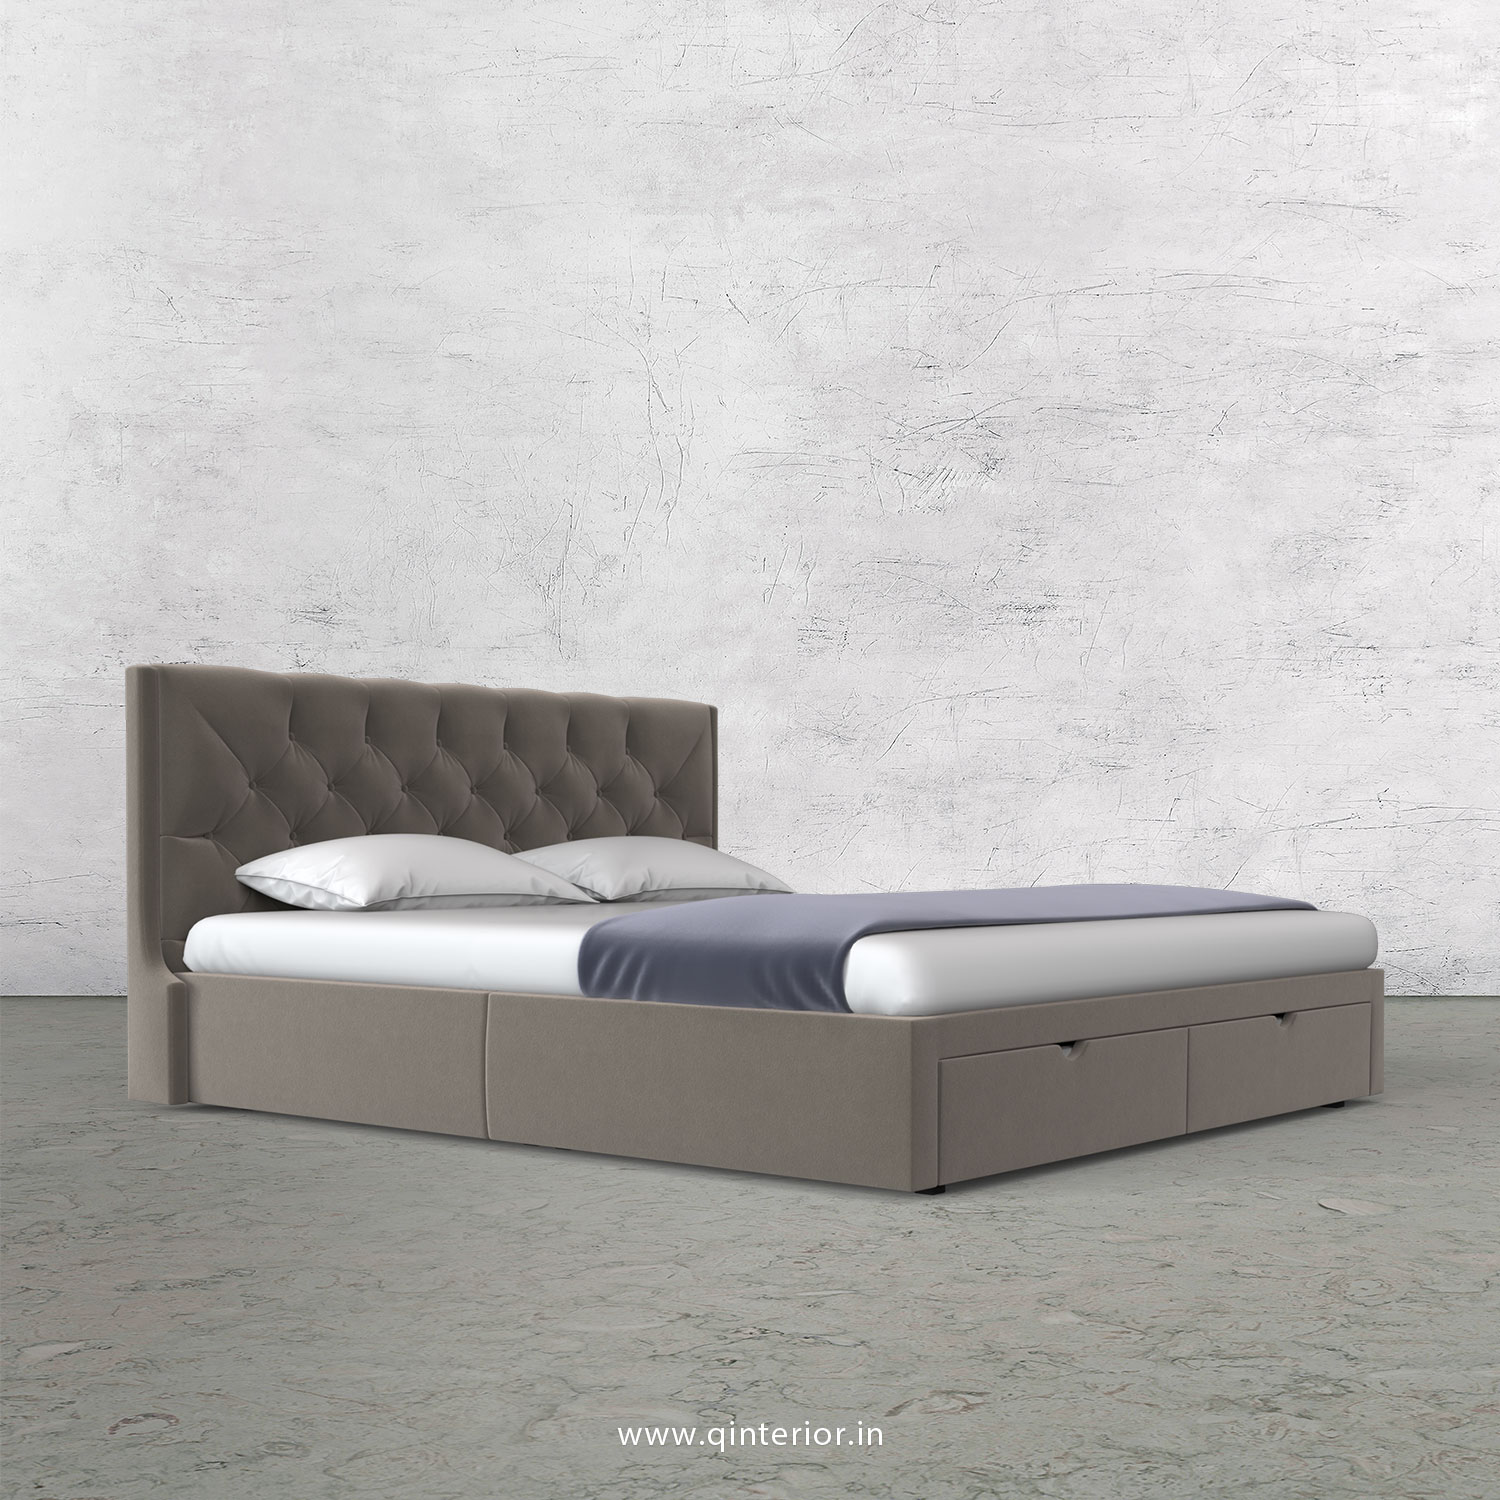 Scorpius King Size Storage Bed in Velvet Fabric - KBD001 VL12